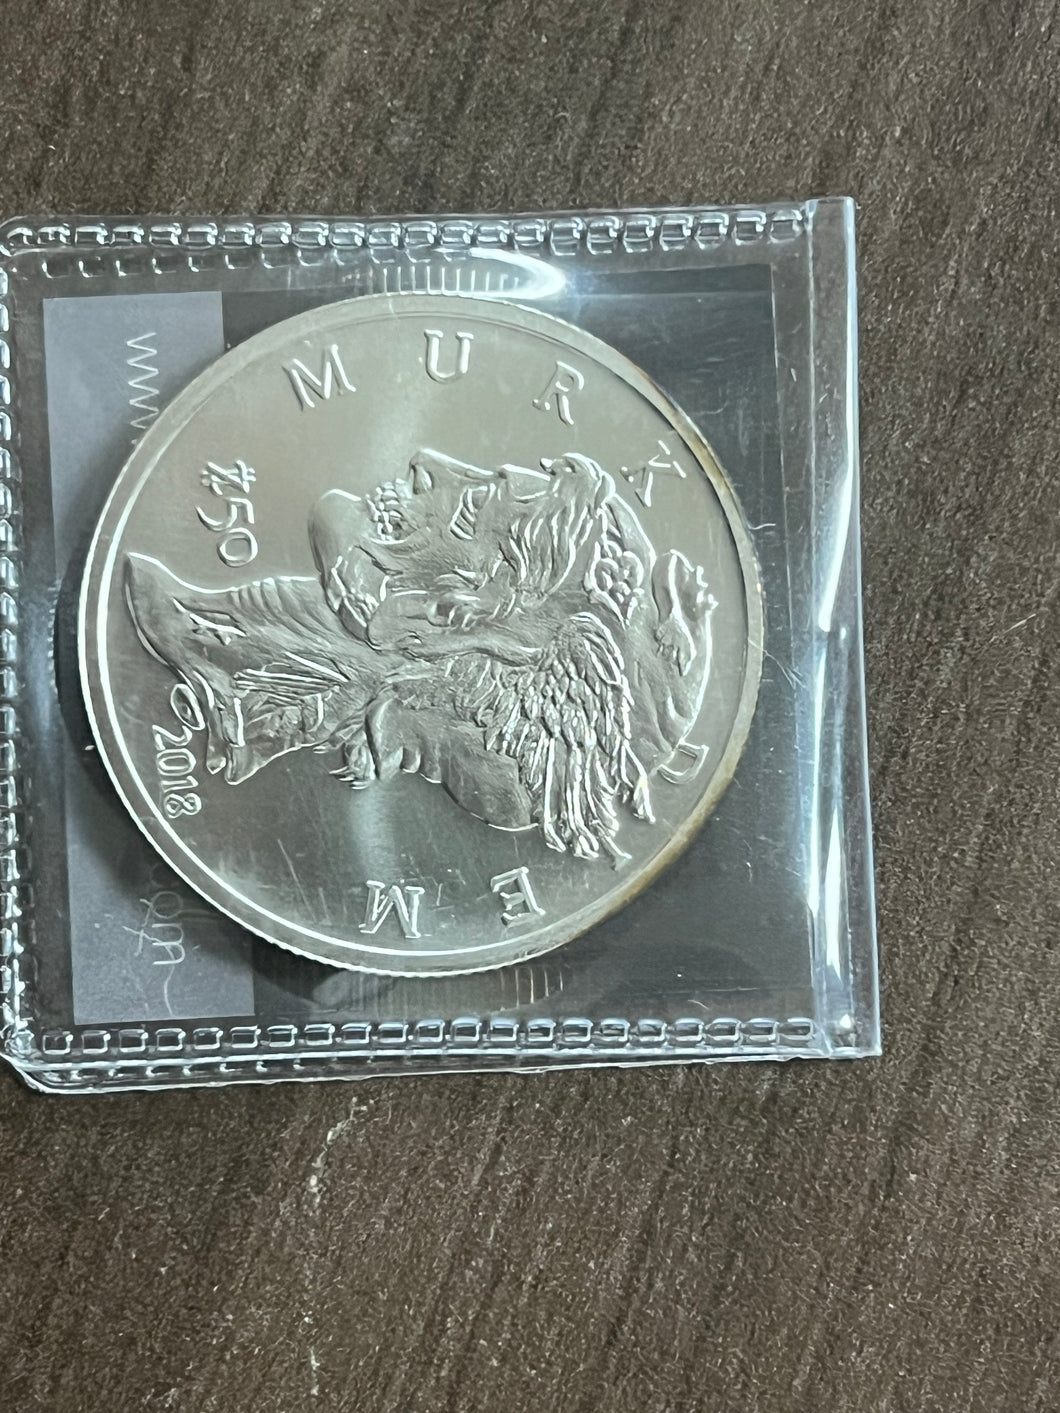 Zombie bucks Murk diem 2018 Zombucks 1 Oz .999 Fine Silver MURK DIEM silver Coin